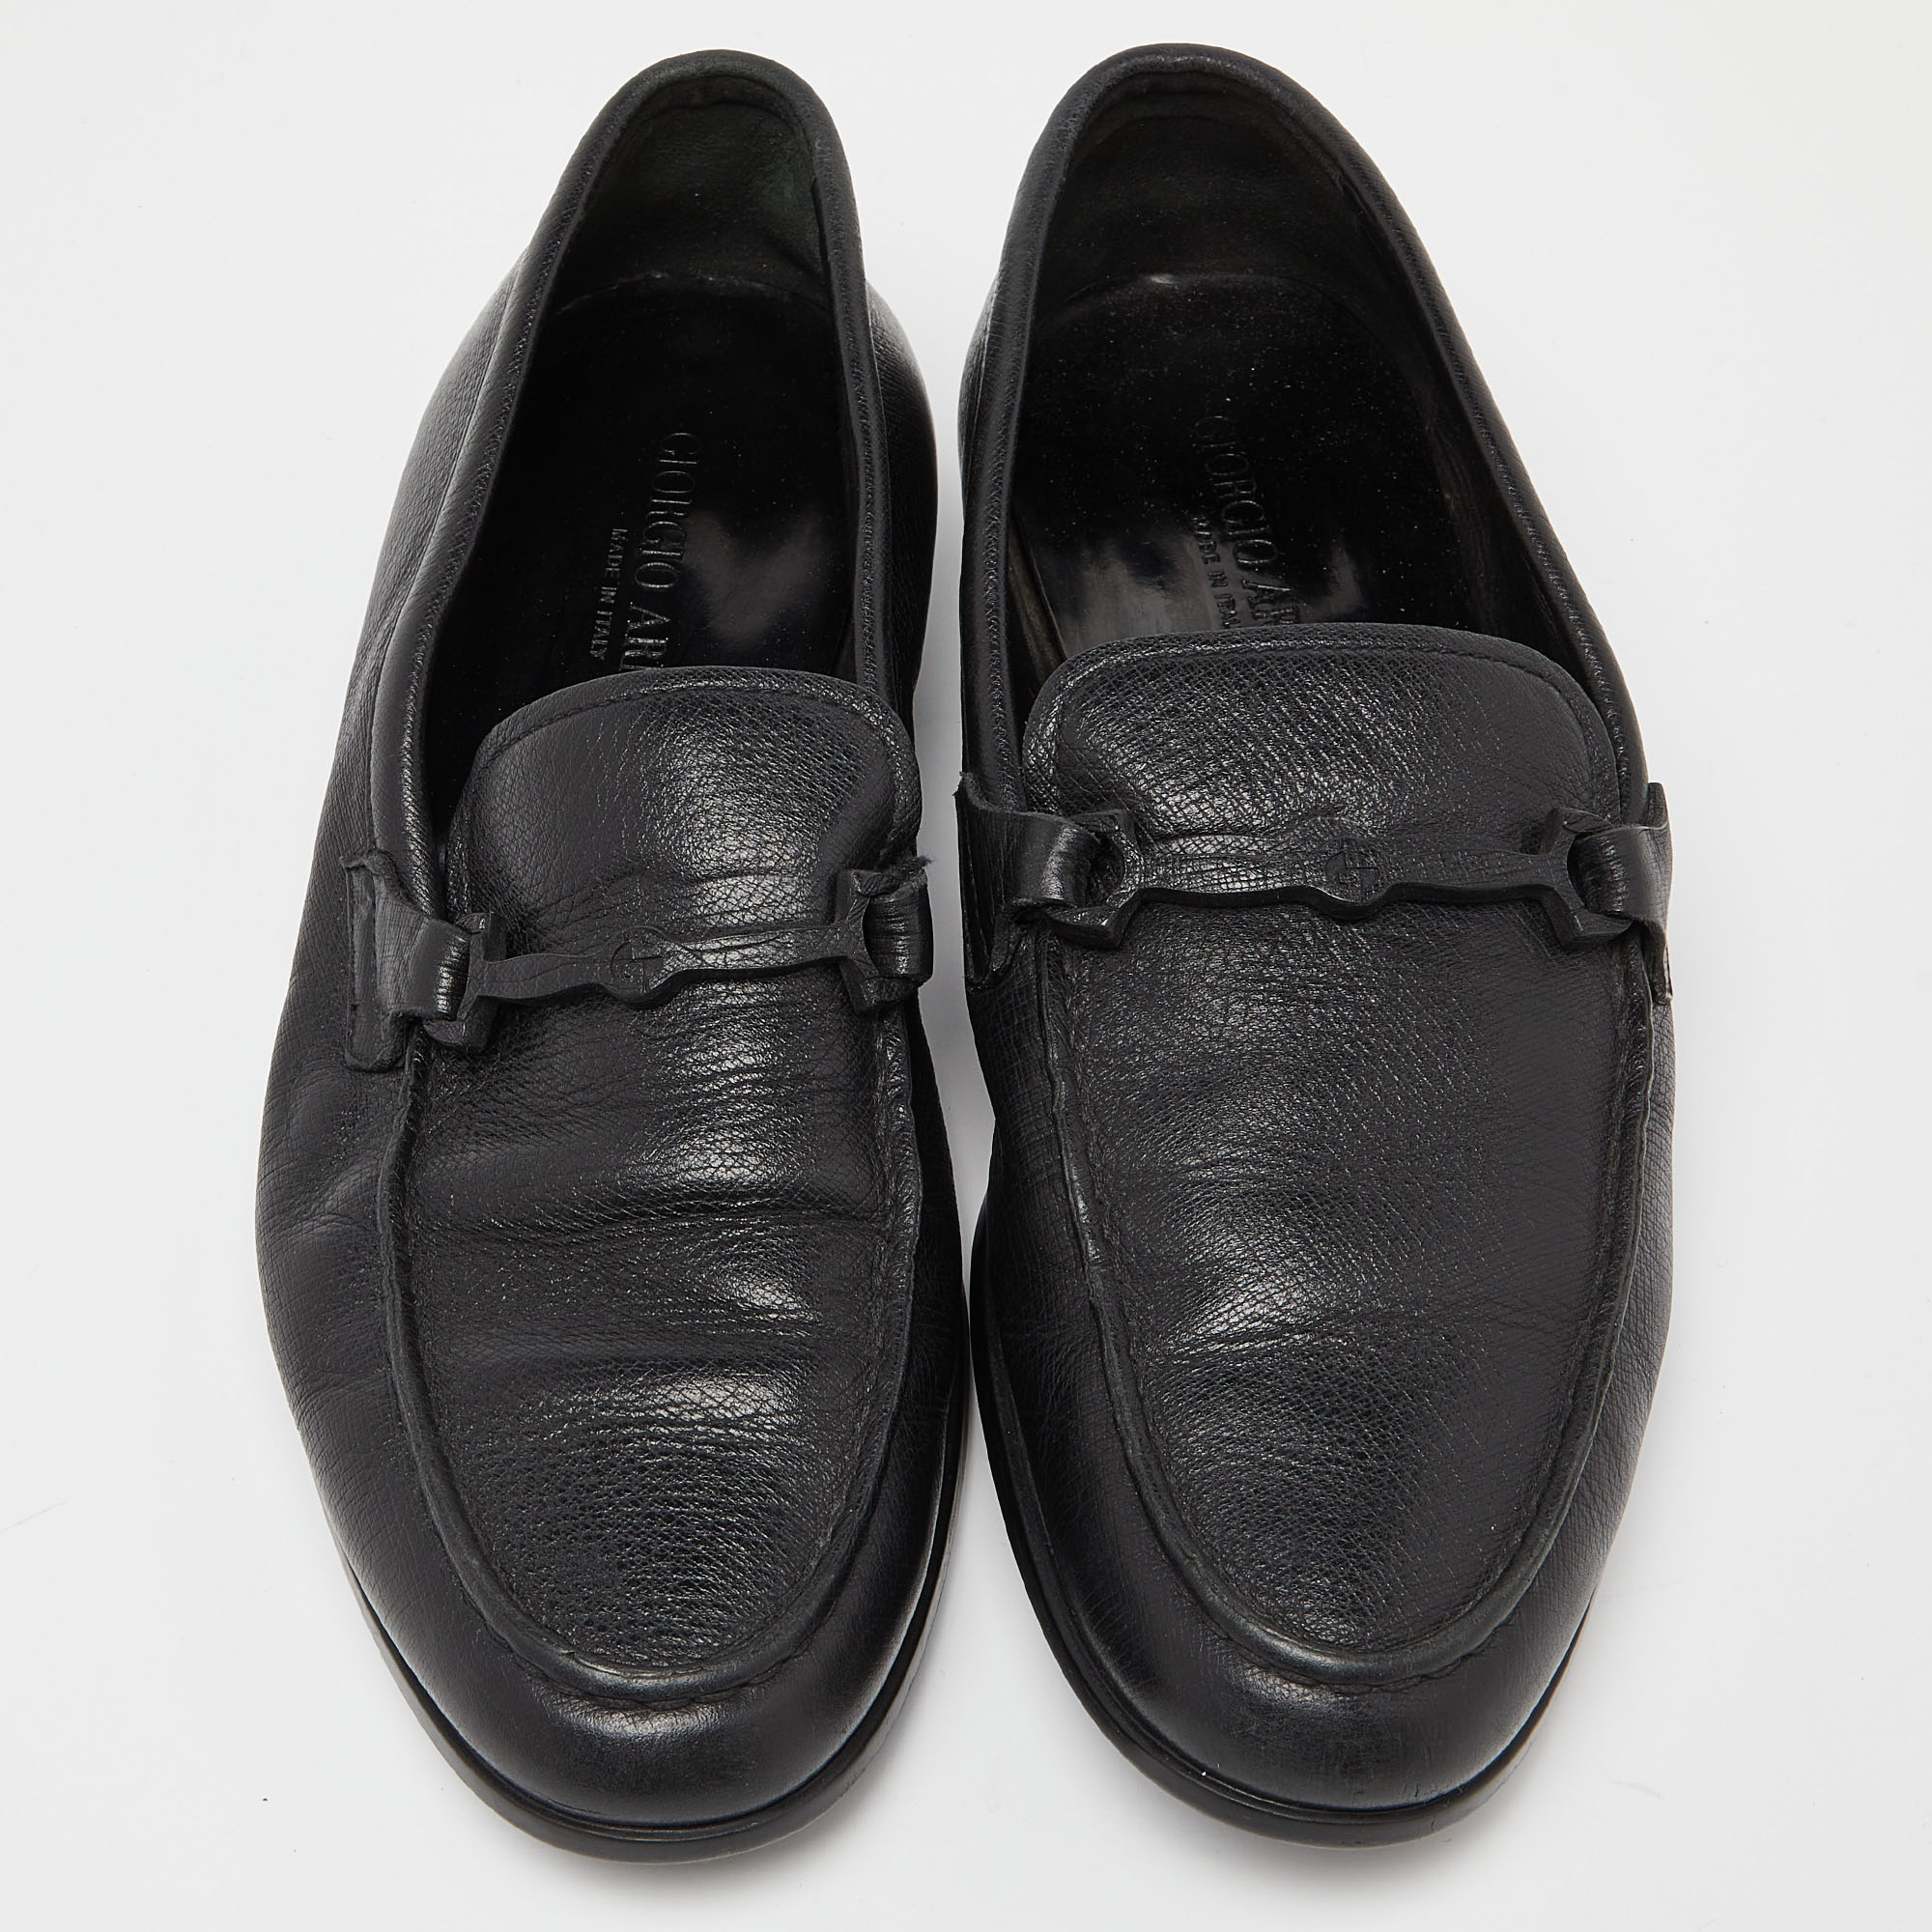 Giorgio Armani Black Leather Slip On Loafers Size 41.5